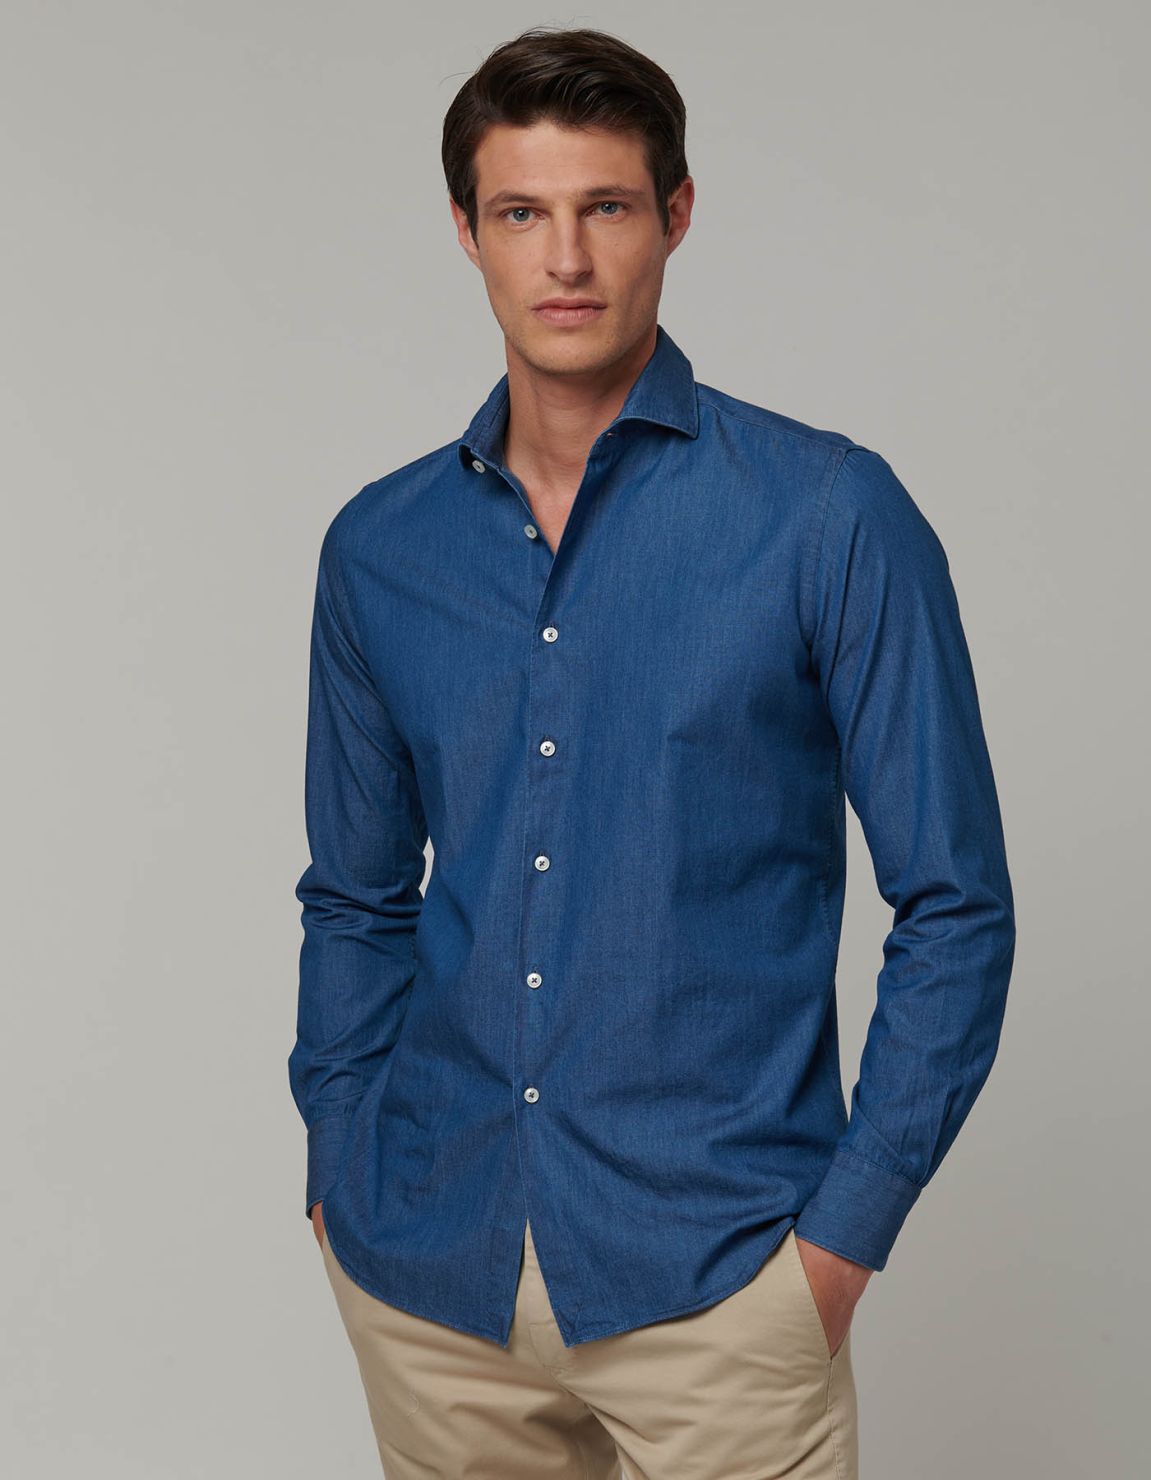 Shirt Collar cutaway Blue Canvas Tailor Custom Fit 1